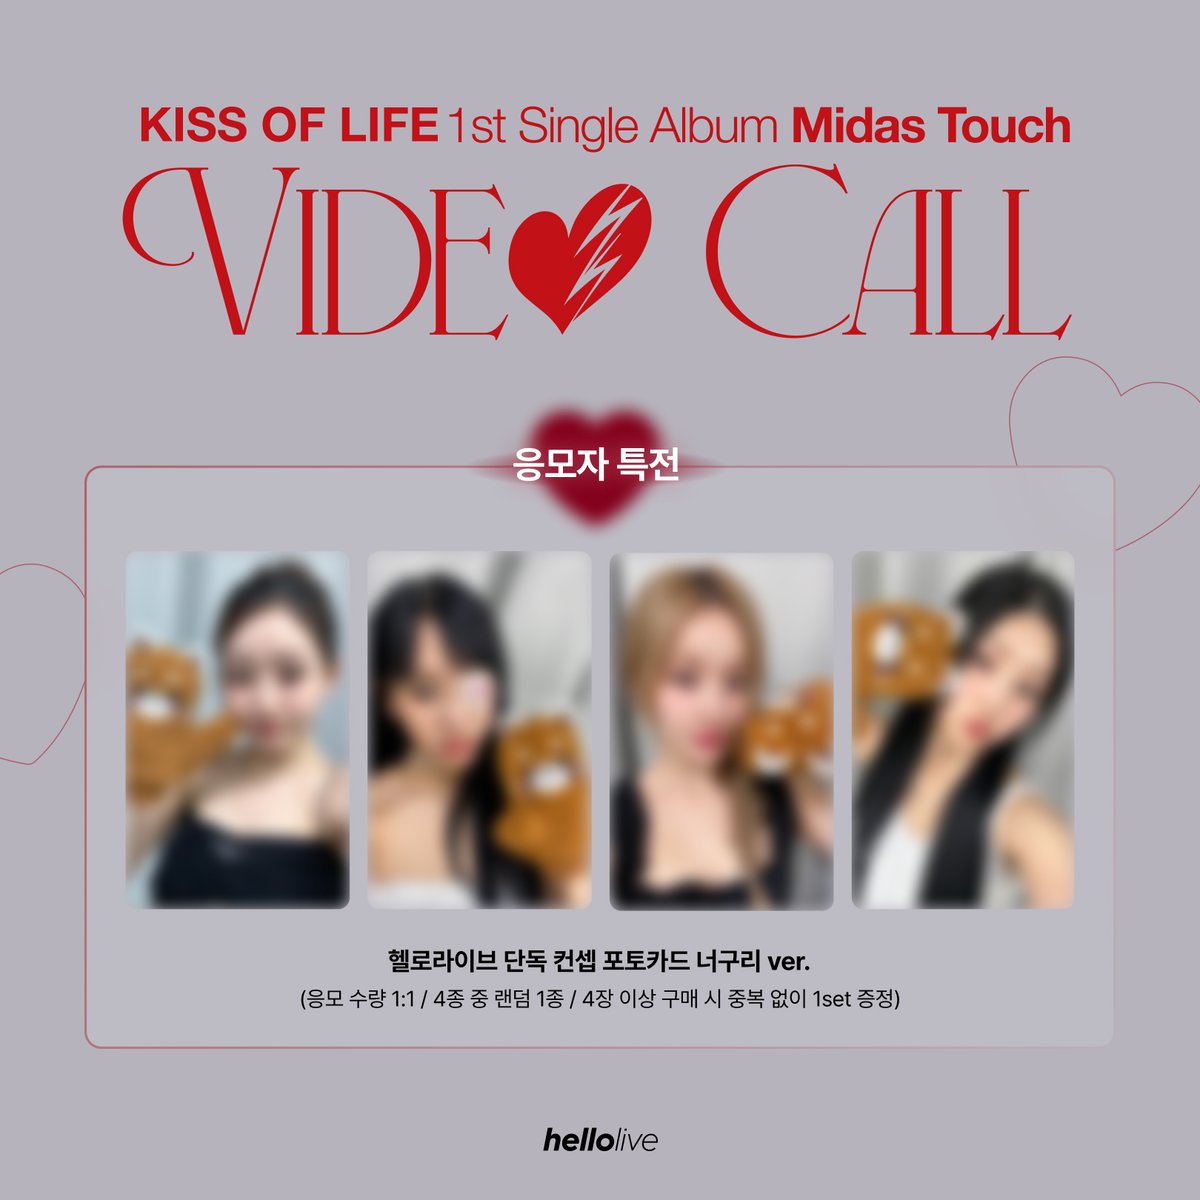 #KISSOFLIFE - 1st Single Album ‘Midas Touch’ 💗1:1 VIDEO CALL EVENT💗 #키스오브라이프 🦝너구리 ver.🤎 포토카드 프리뷰 공개! ⏰~05.21(일) 23:59 KST 응모 마감 🎁hellolive.tv/detail/315